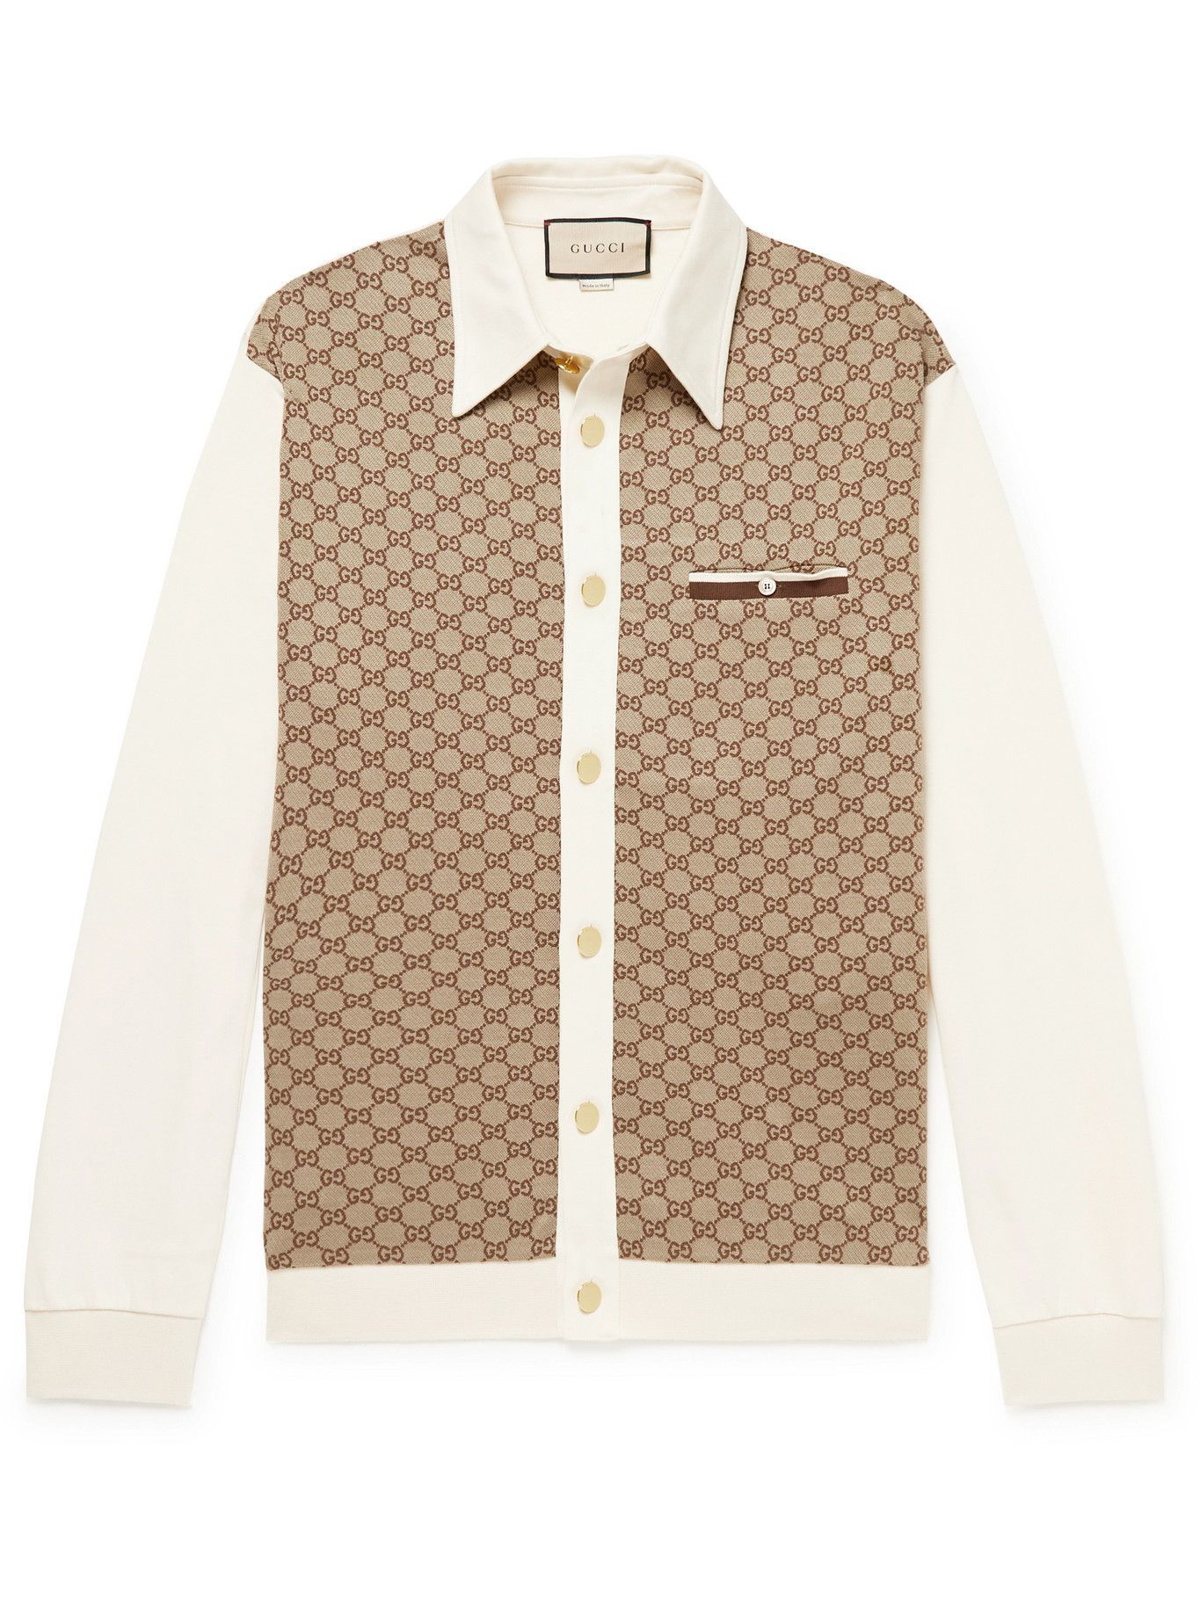 GUCCI - Logo-Jacquard Silk and Cotton-Blend Shirt - Brown Gucci